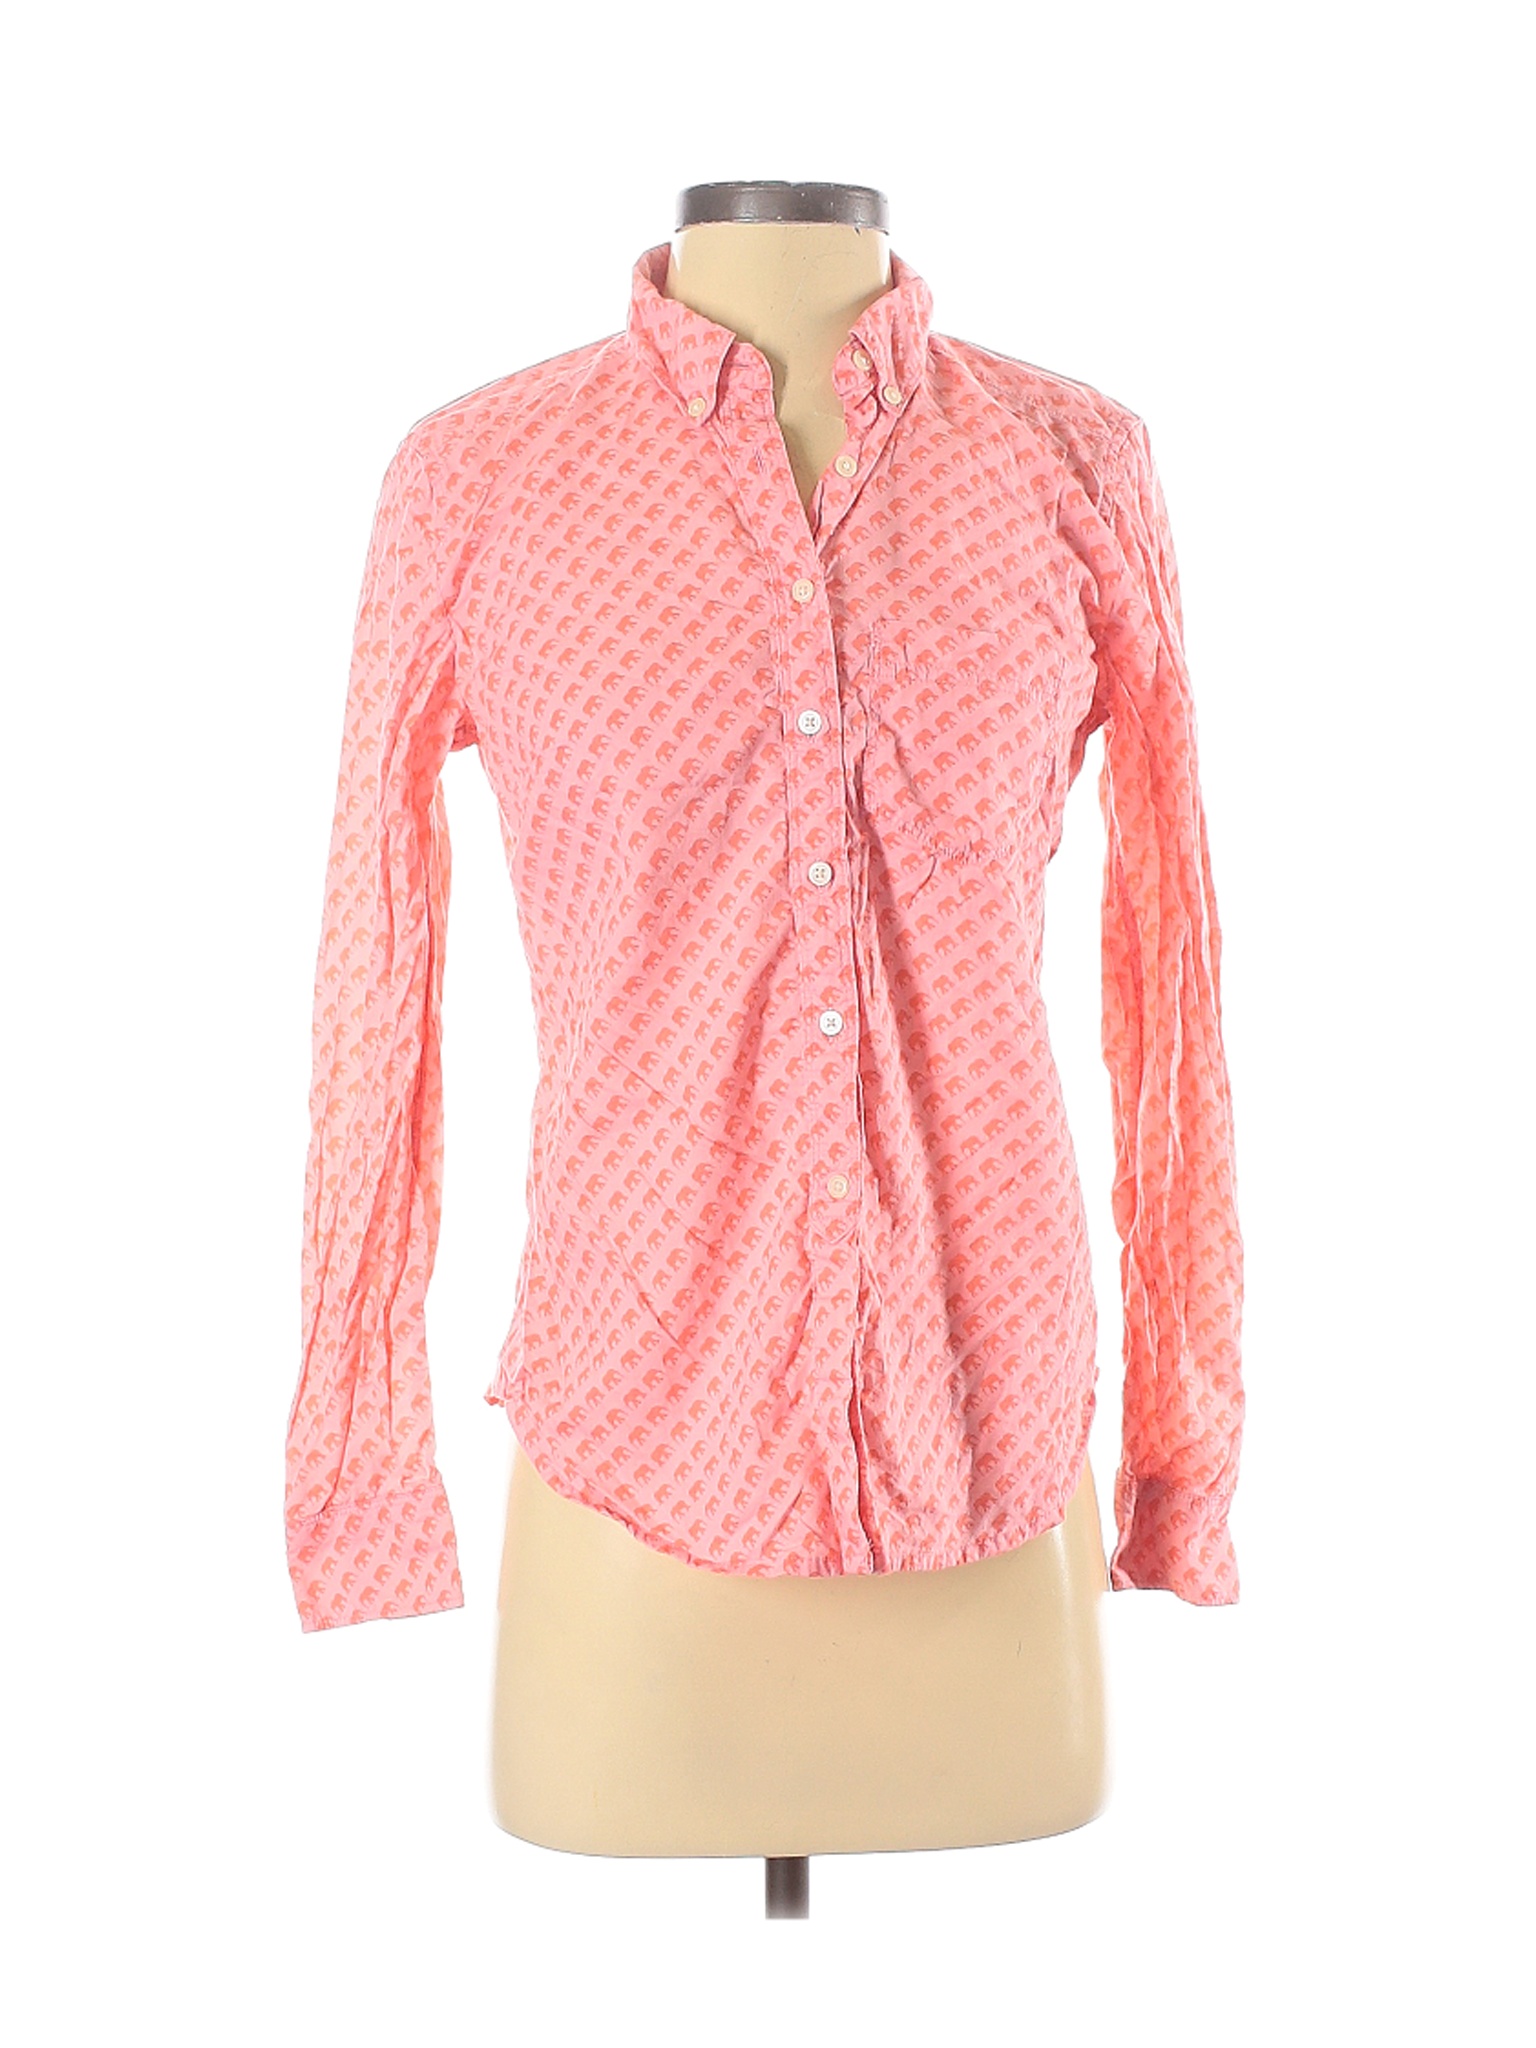 Gap Women Pink Long Sleeve Button-Down Shirt XS | eBay